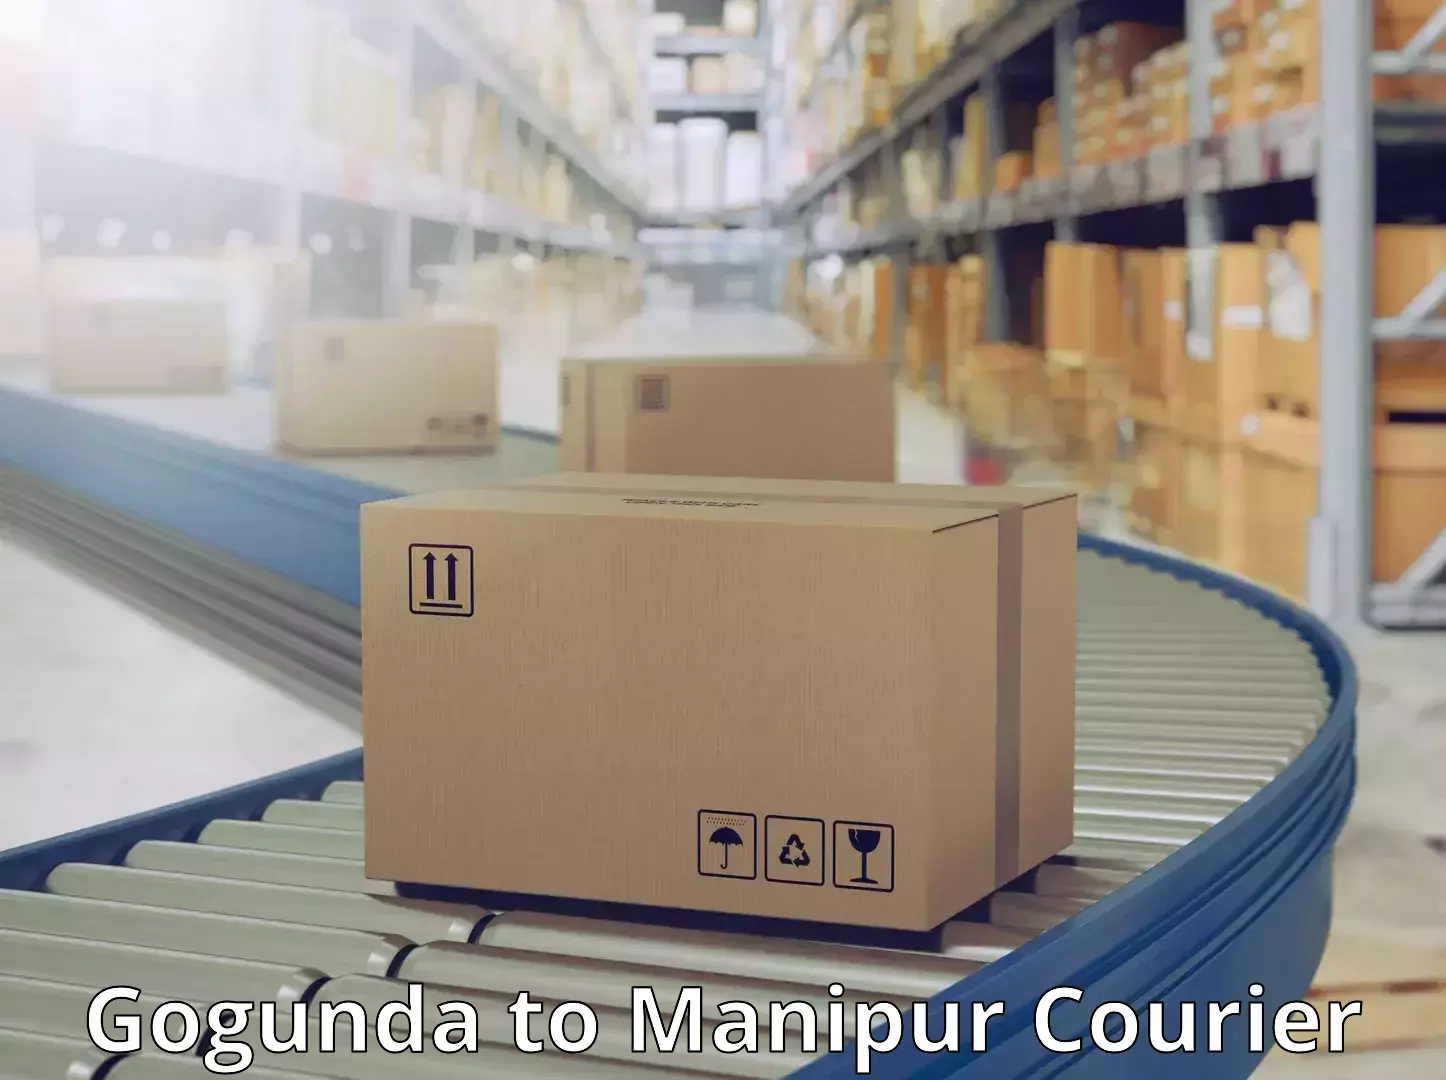 Bulk courier orders Gogunda to Manipur